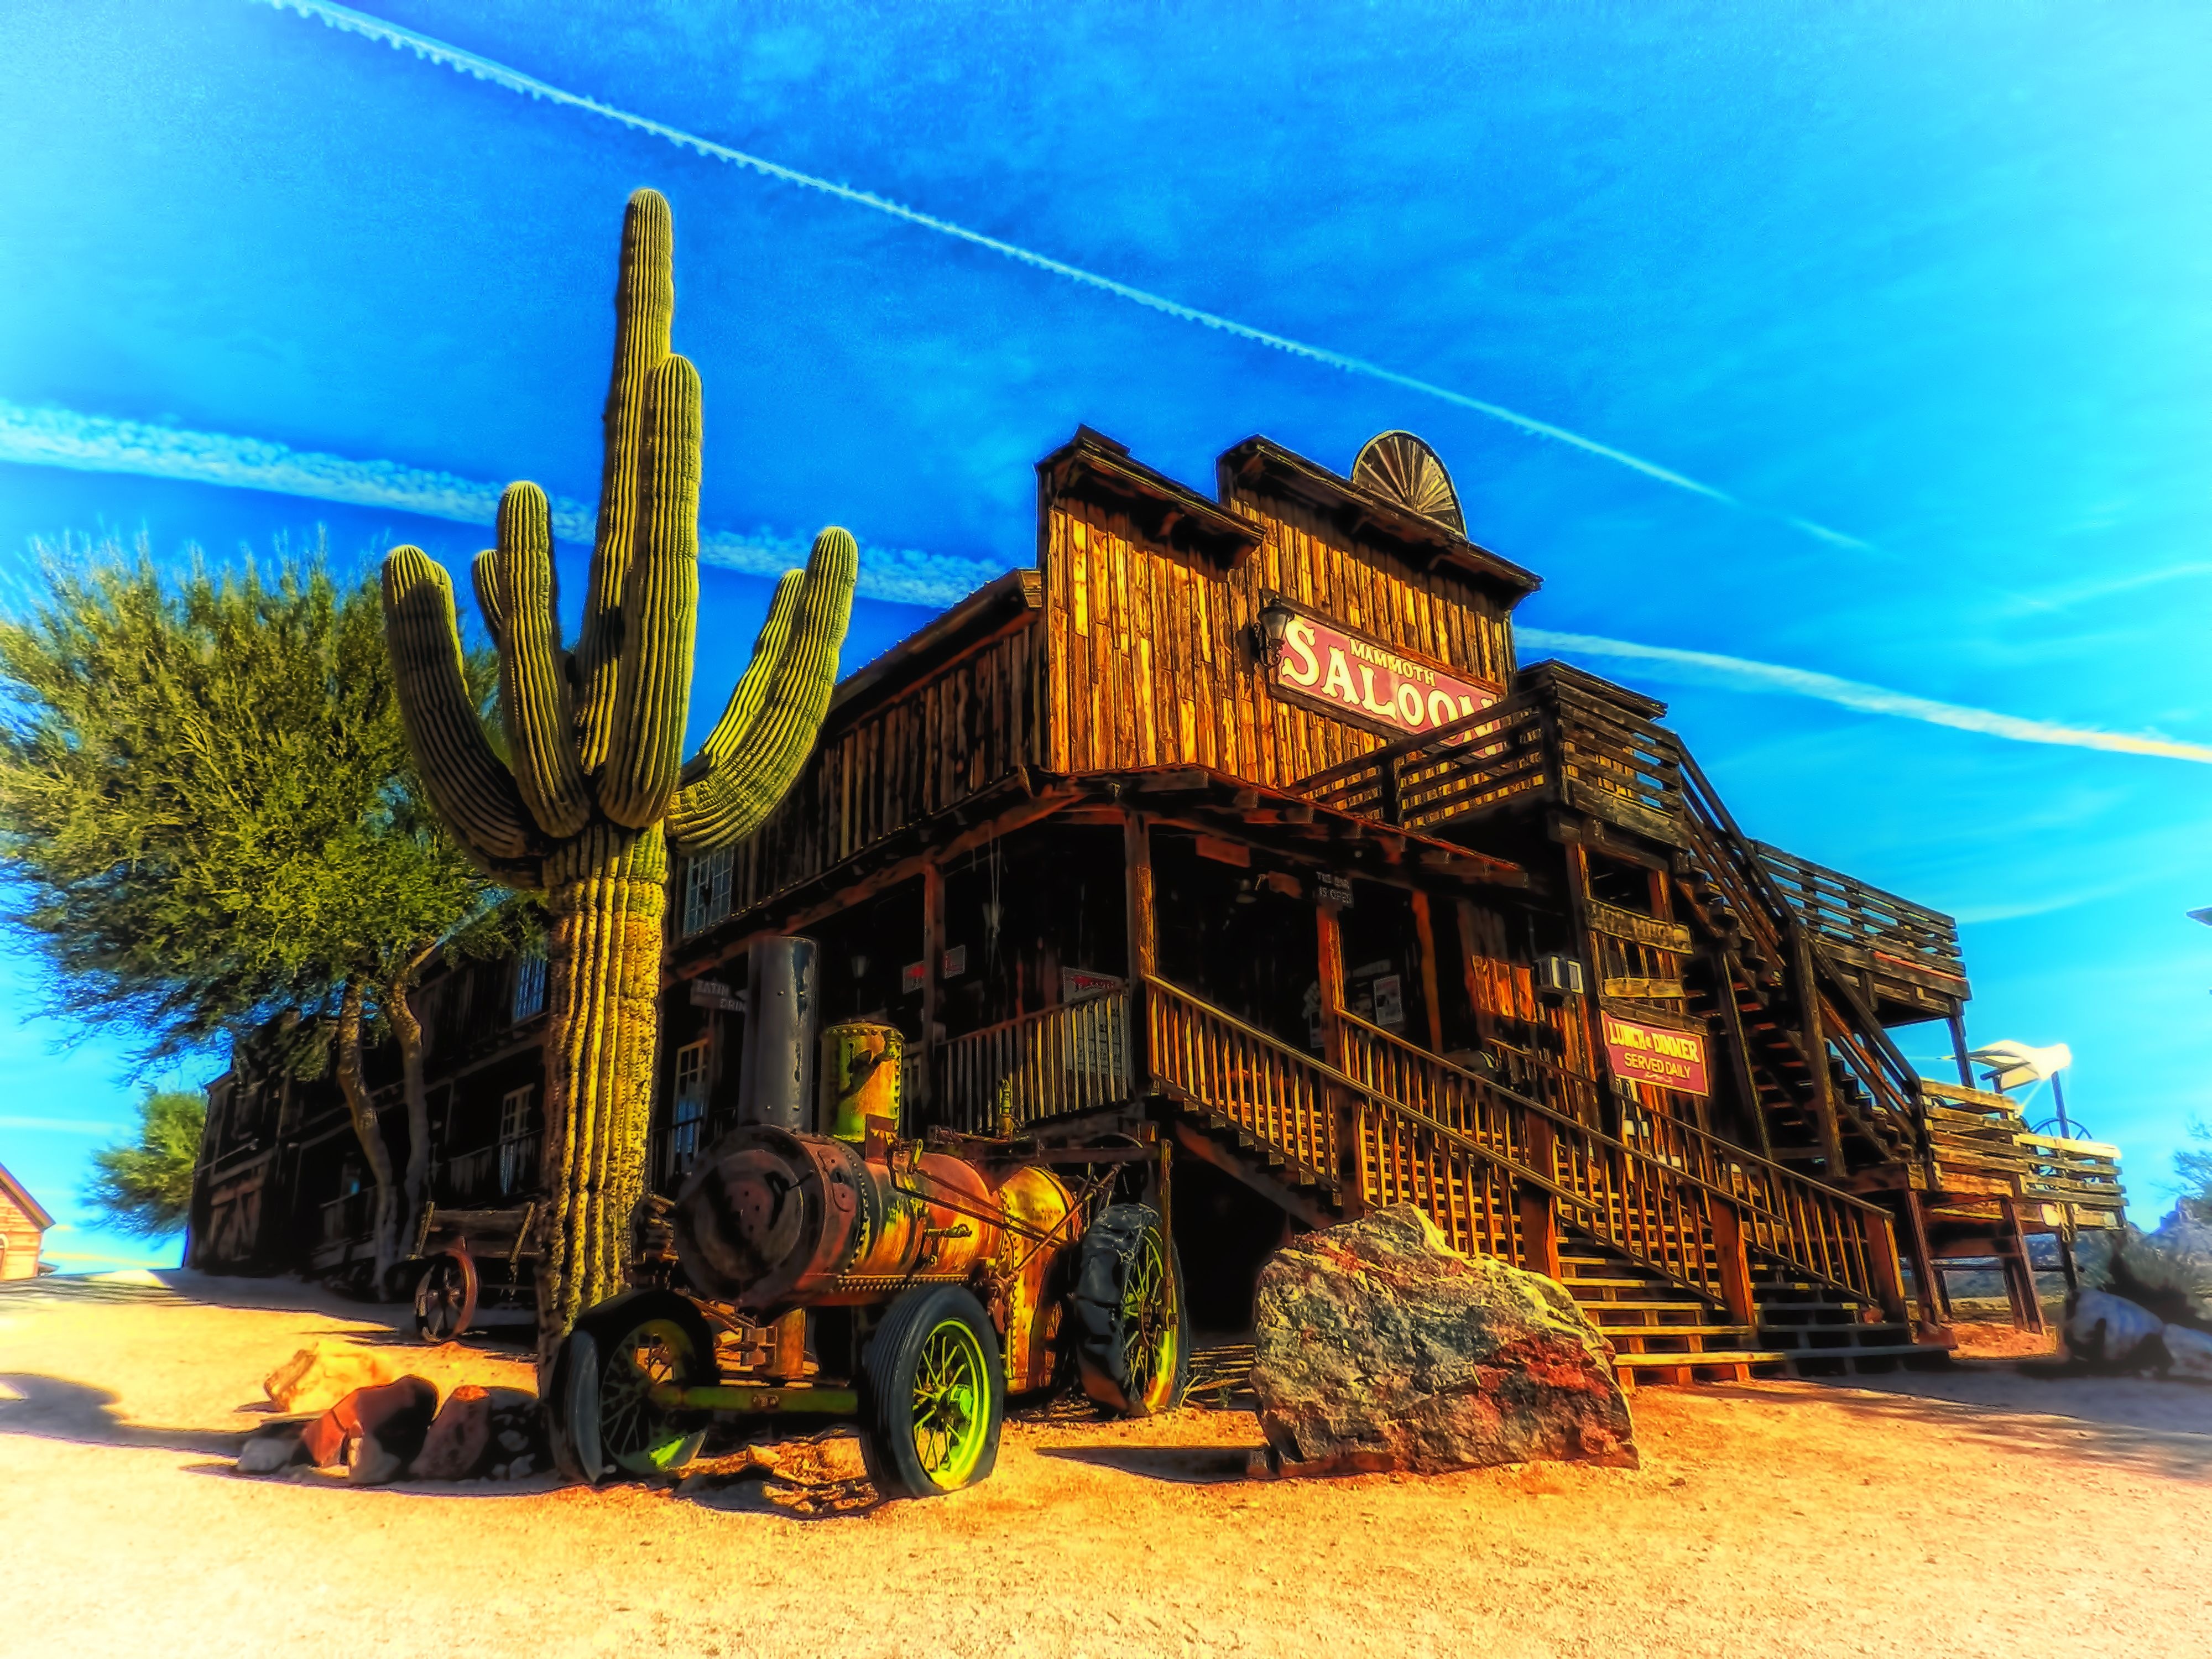 Arizona saloon cactus landscape western hdr f wallpaper background